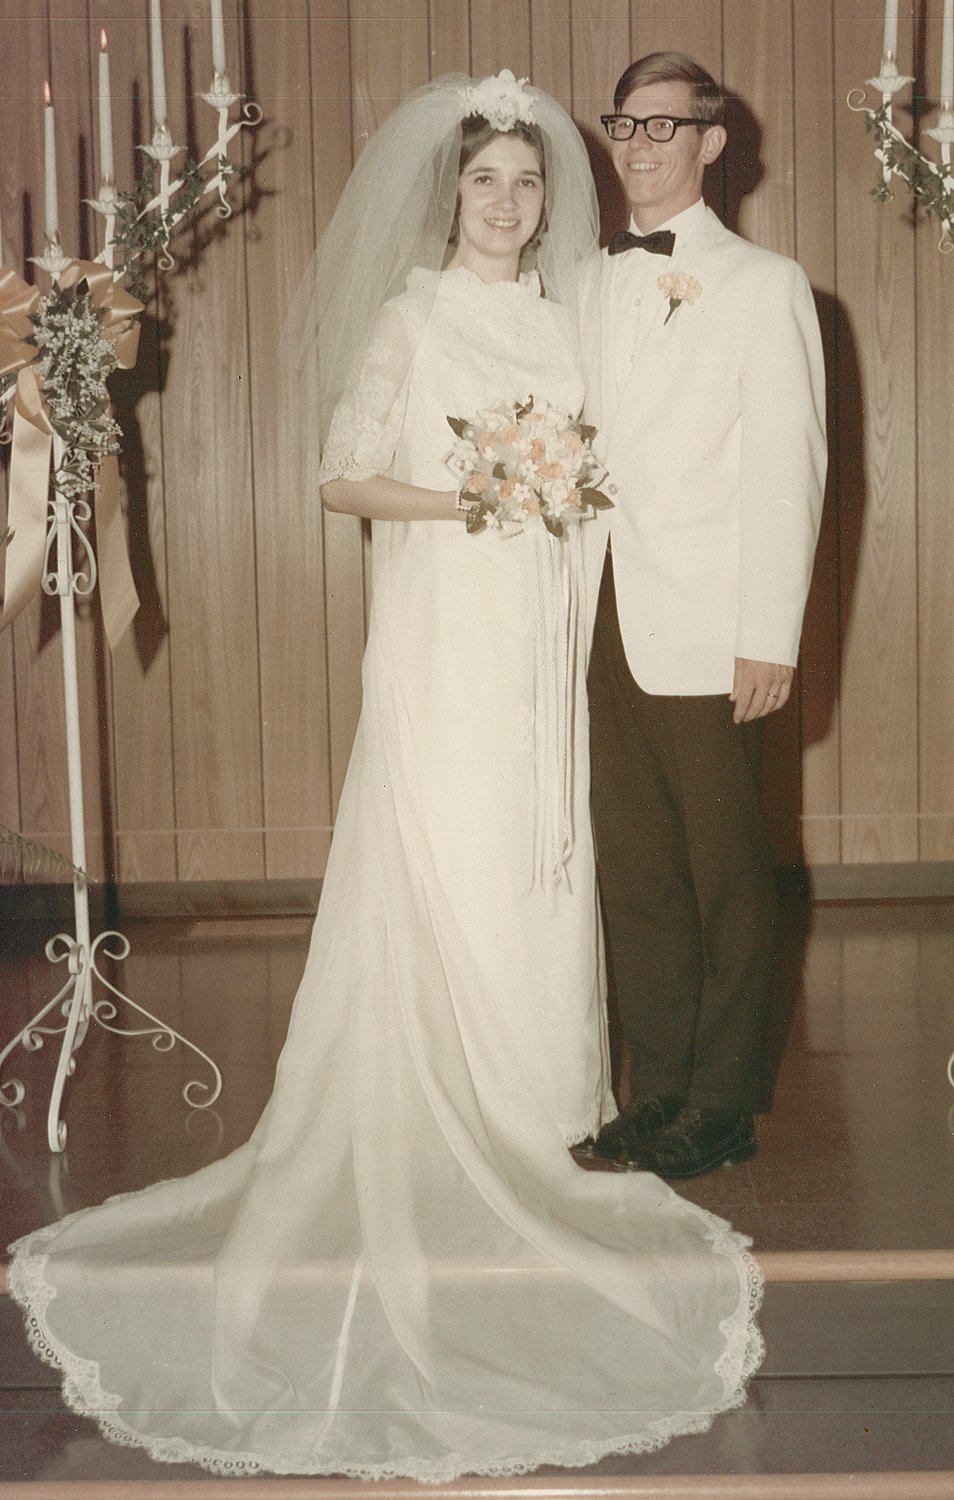 The couple on their wedding day, Aug. 23, 1970.